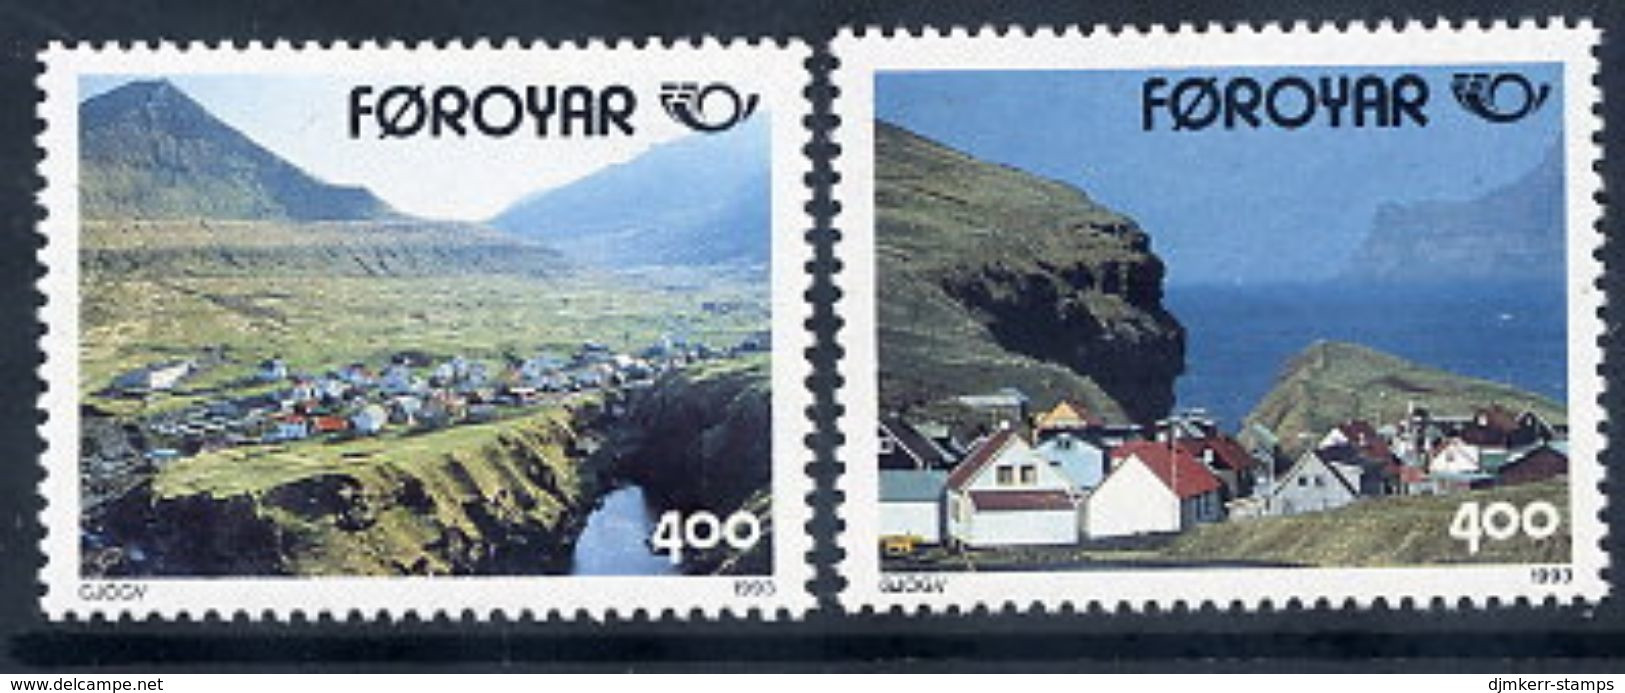 FAROE ISLANDS 1993 Nordic Countries: Tourism  MNH / **.  Michel 246-47 - Faeroër